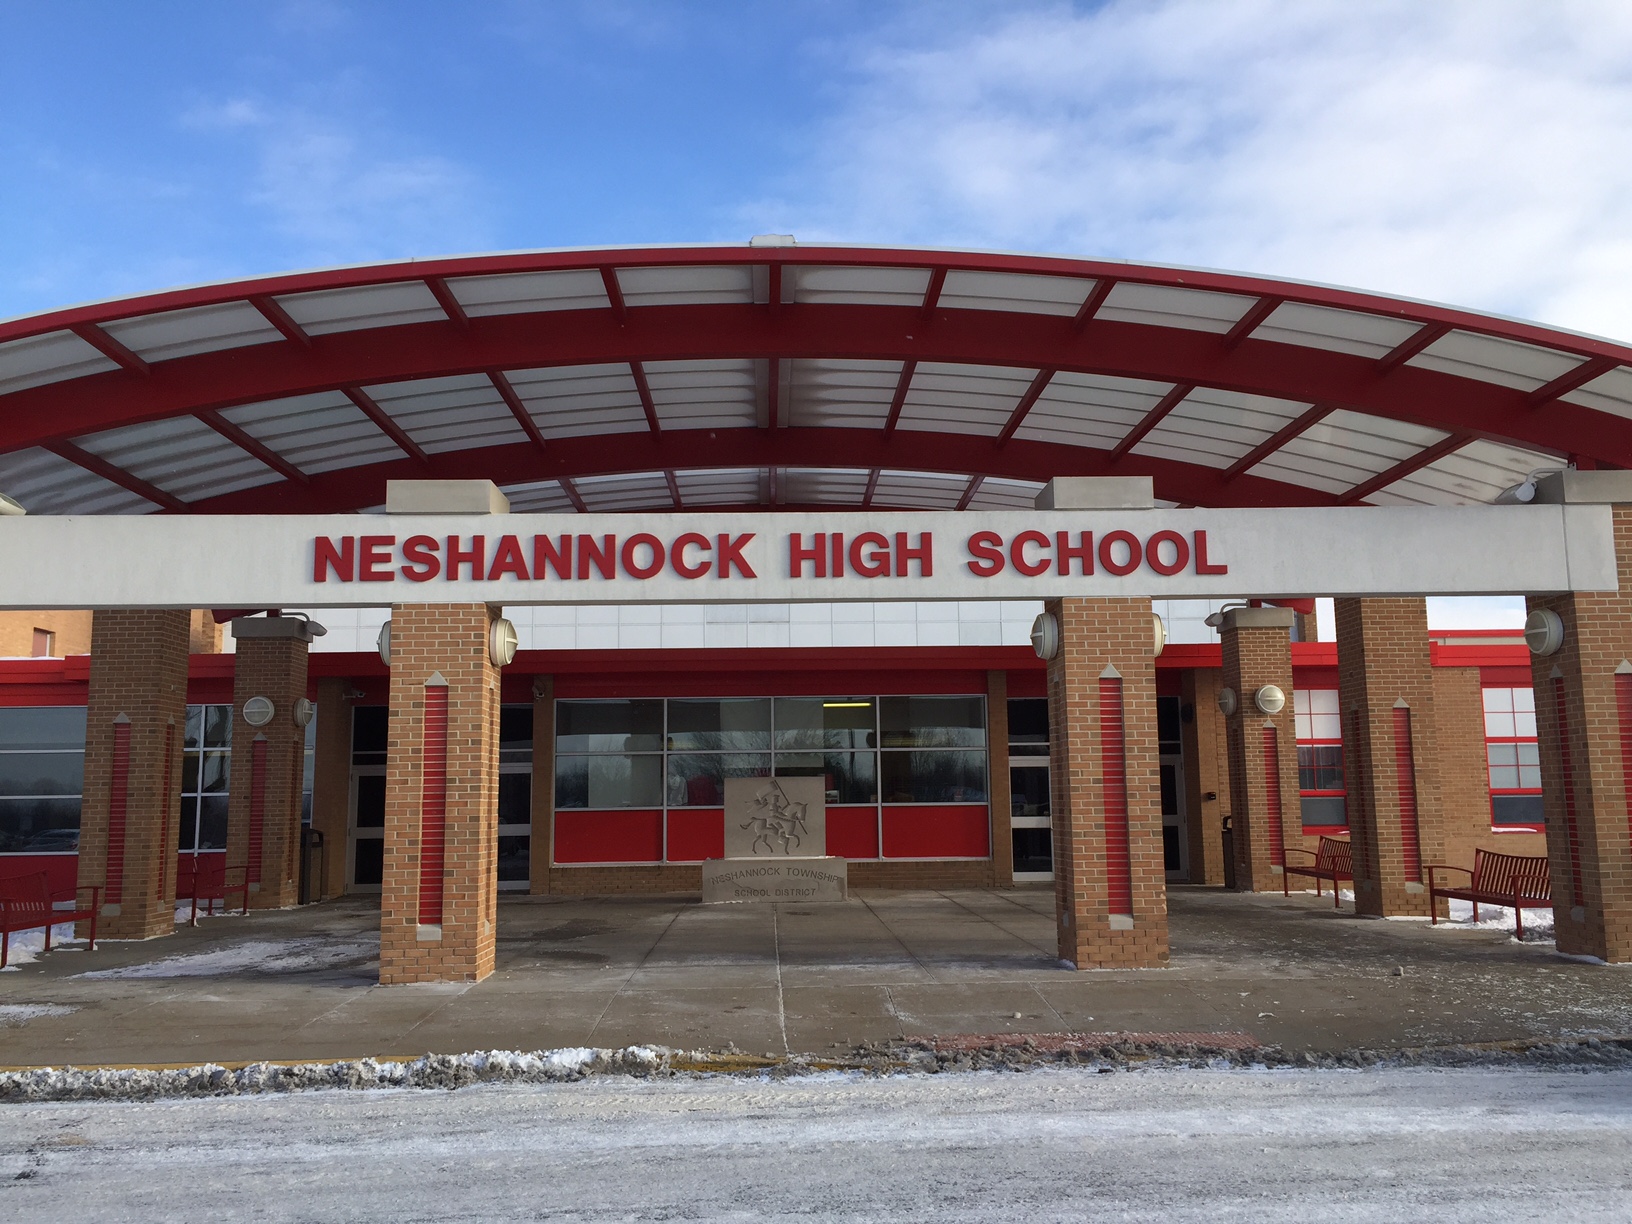 go.edustar - Neshannock Township School District